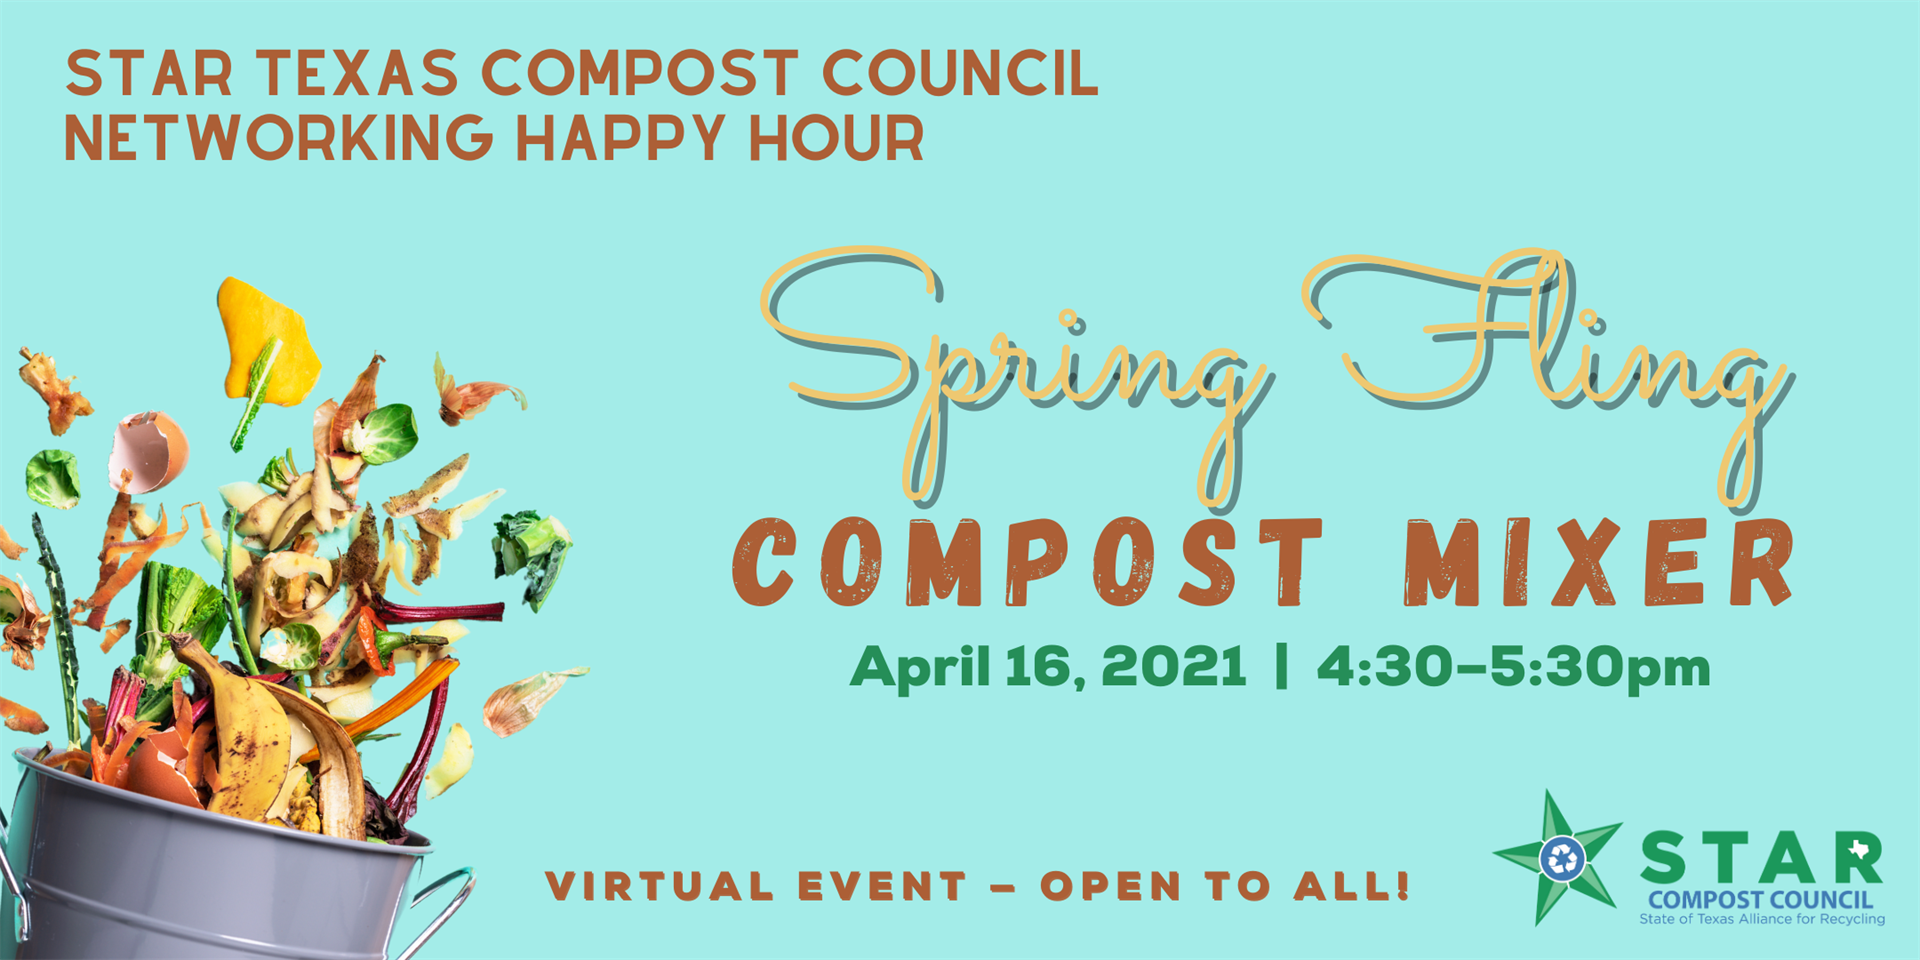 STAR Texas Compost Council Event